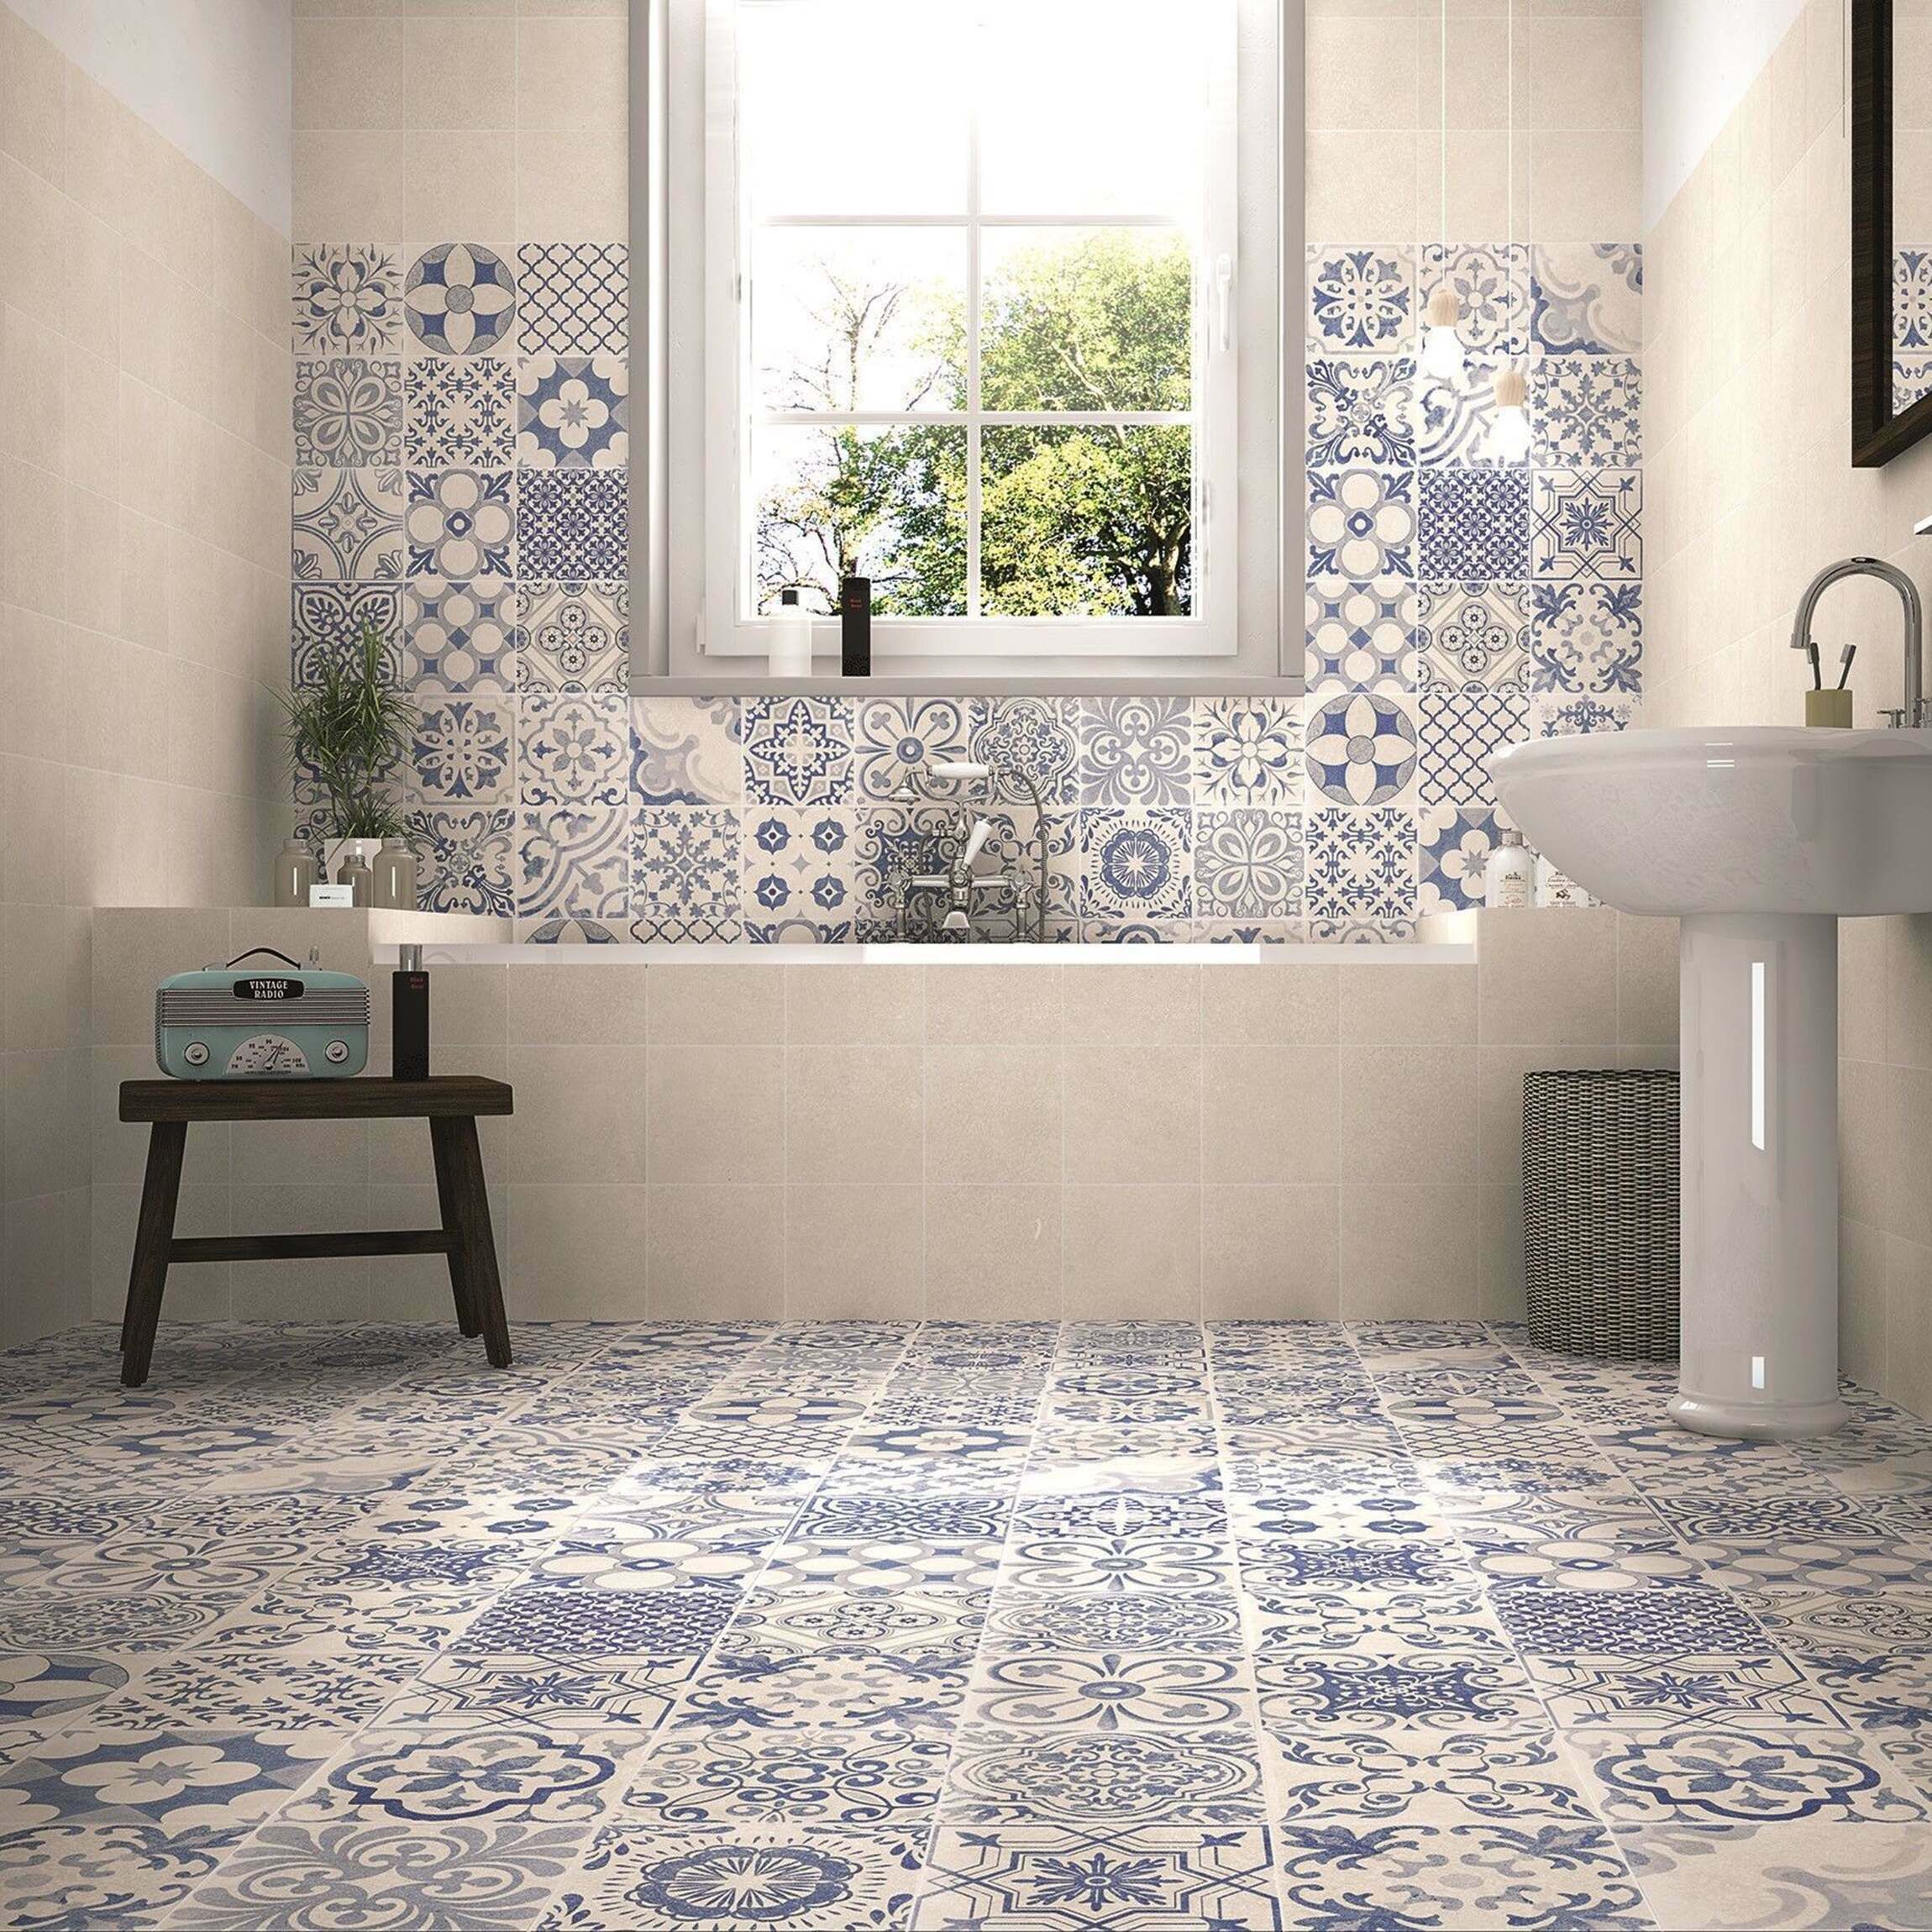 Skyros Delft Blue Wall And Floor Tile, Pics Of Bathroom Floor Tiles